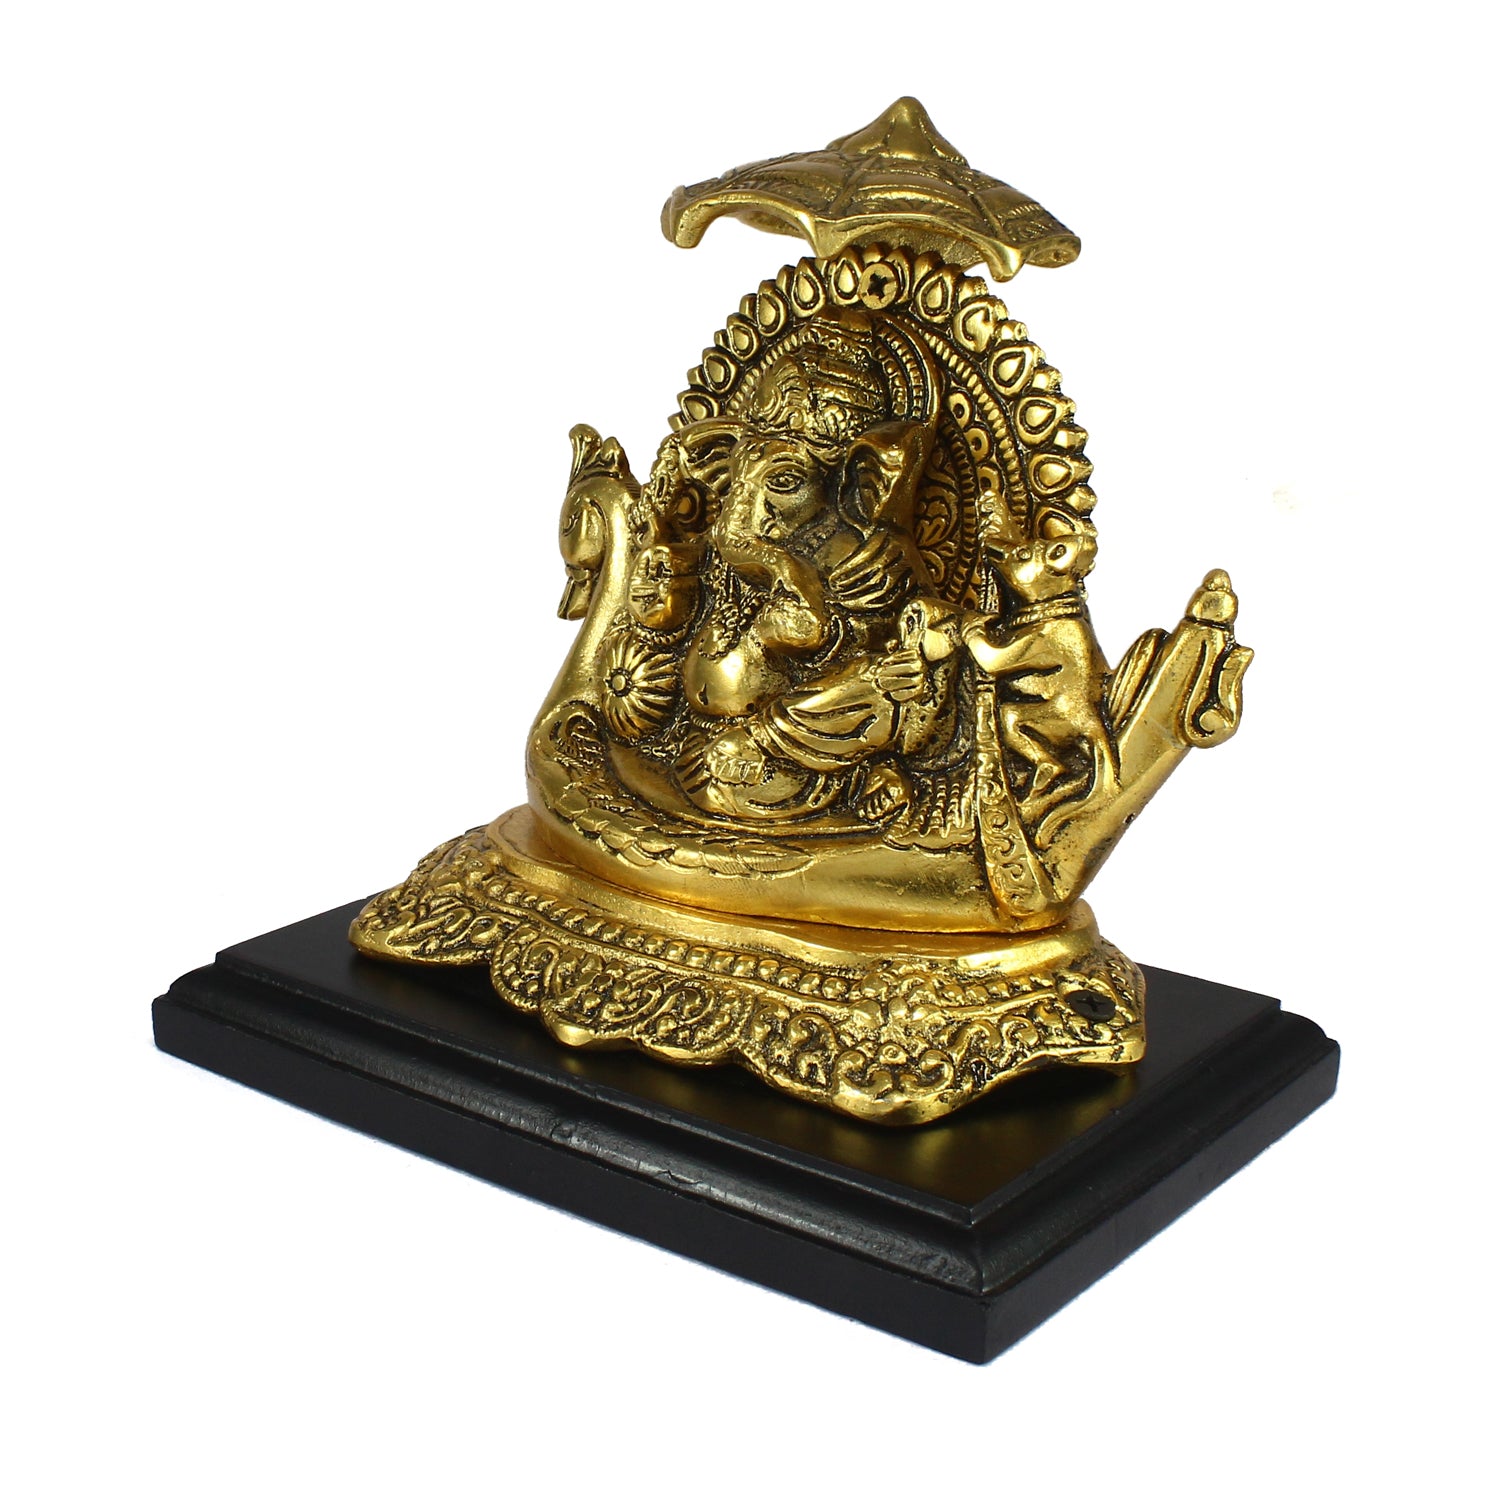 Golden Lord Ganesha sitting on Swan Throne 4